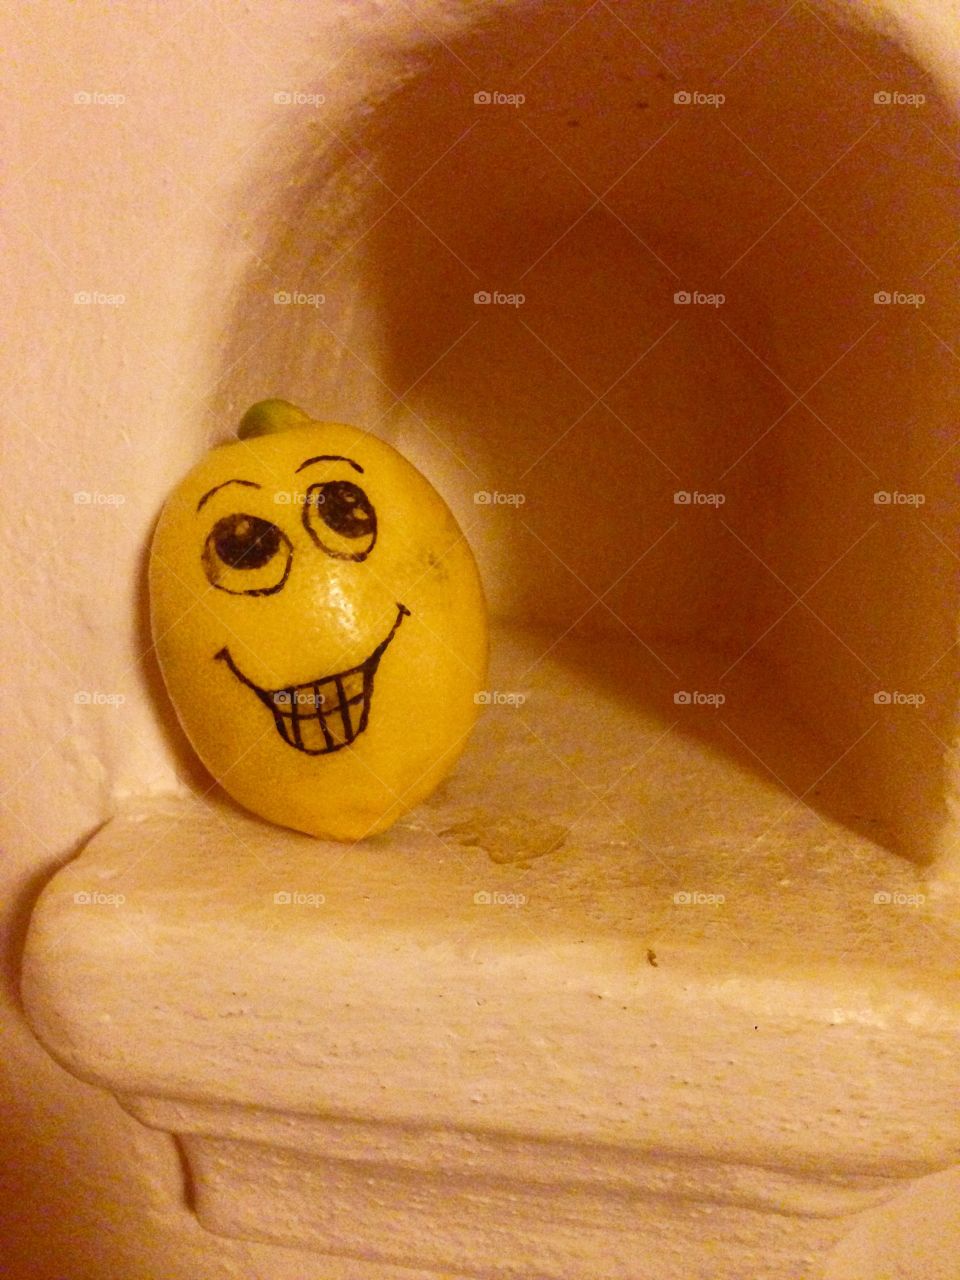 Mr.Lemon